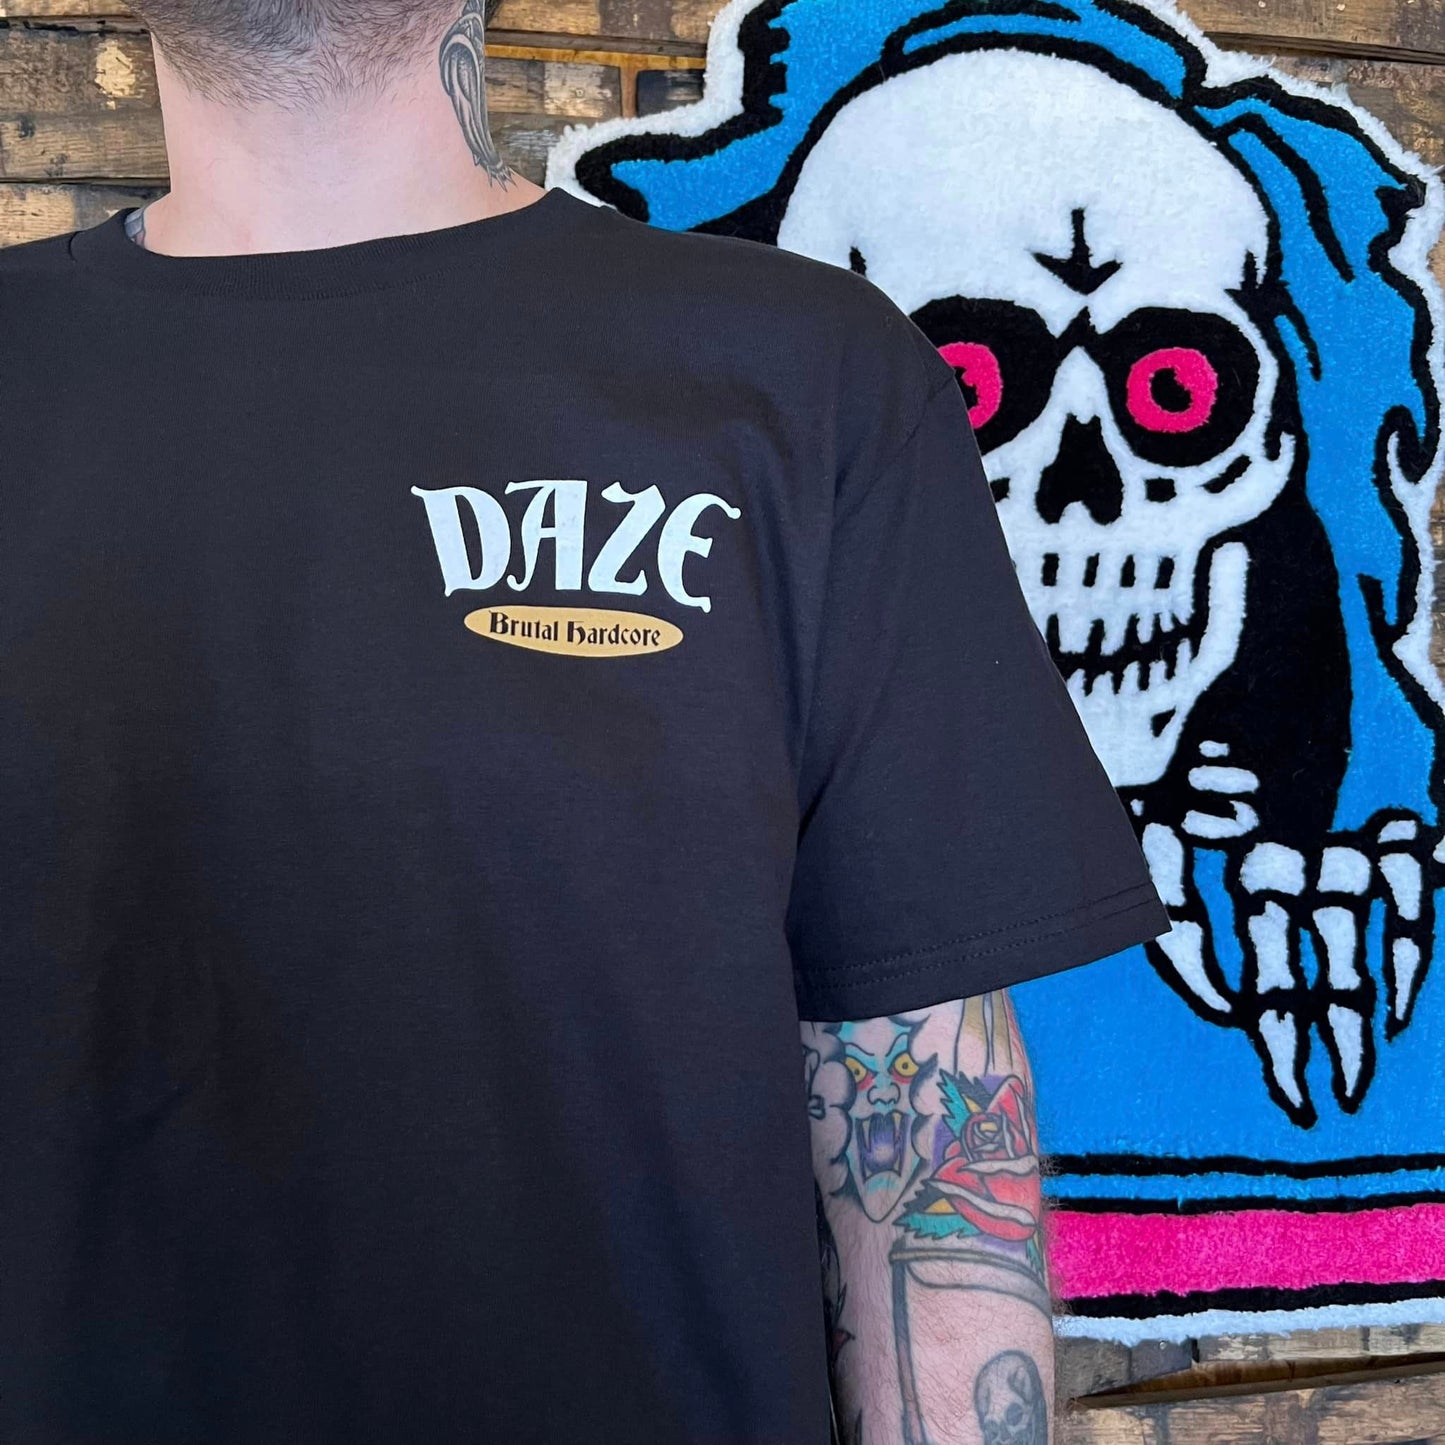 DAZE - LDBBB Roster Shirt